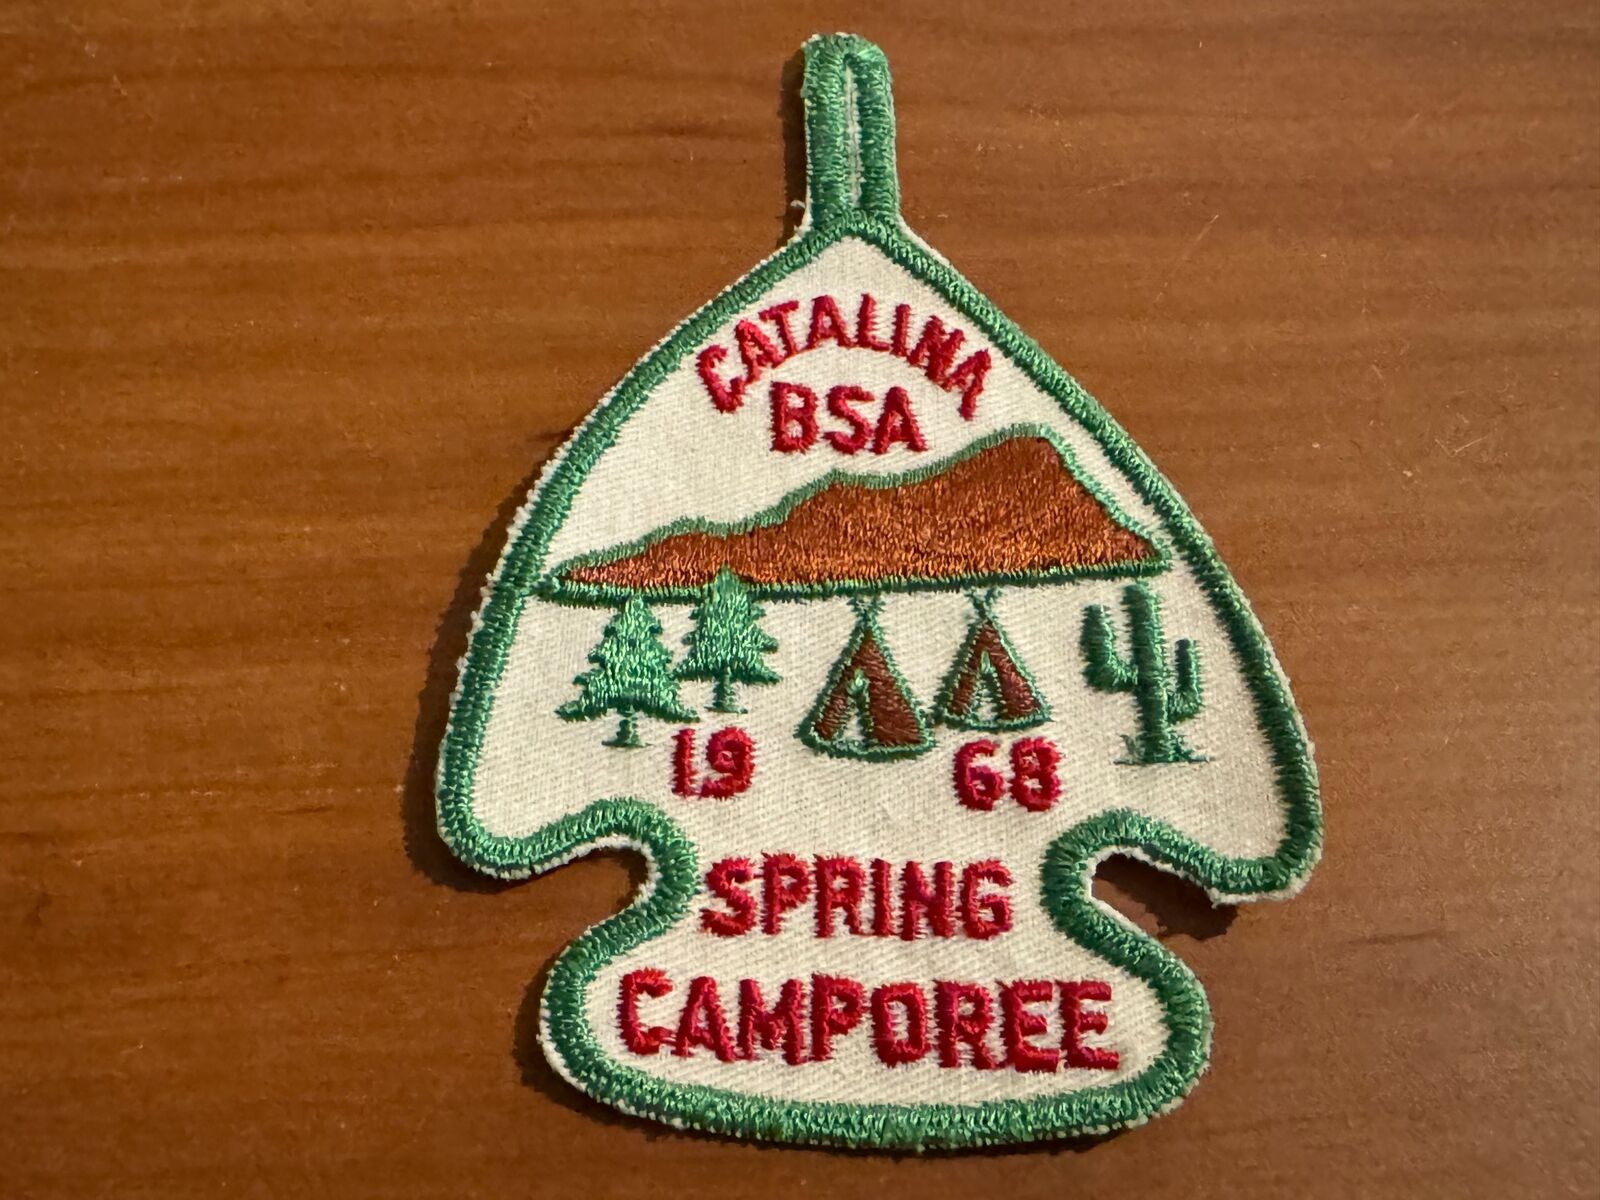 BSA, 1968 Spring Camporee Patch, Catalina Council